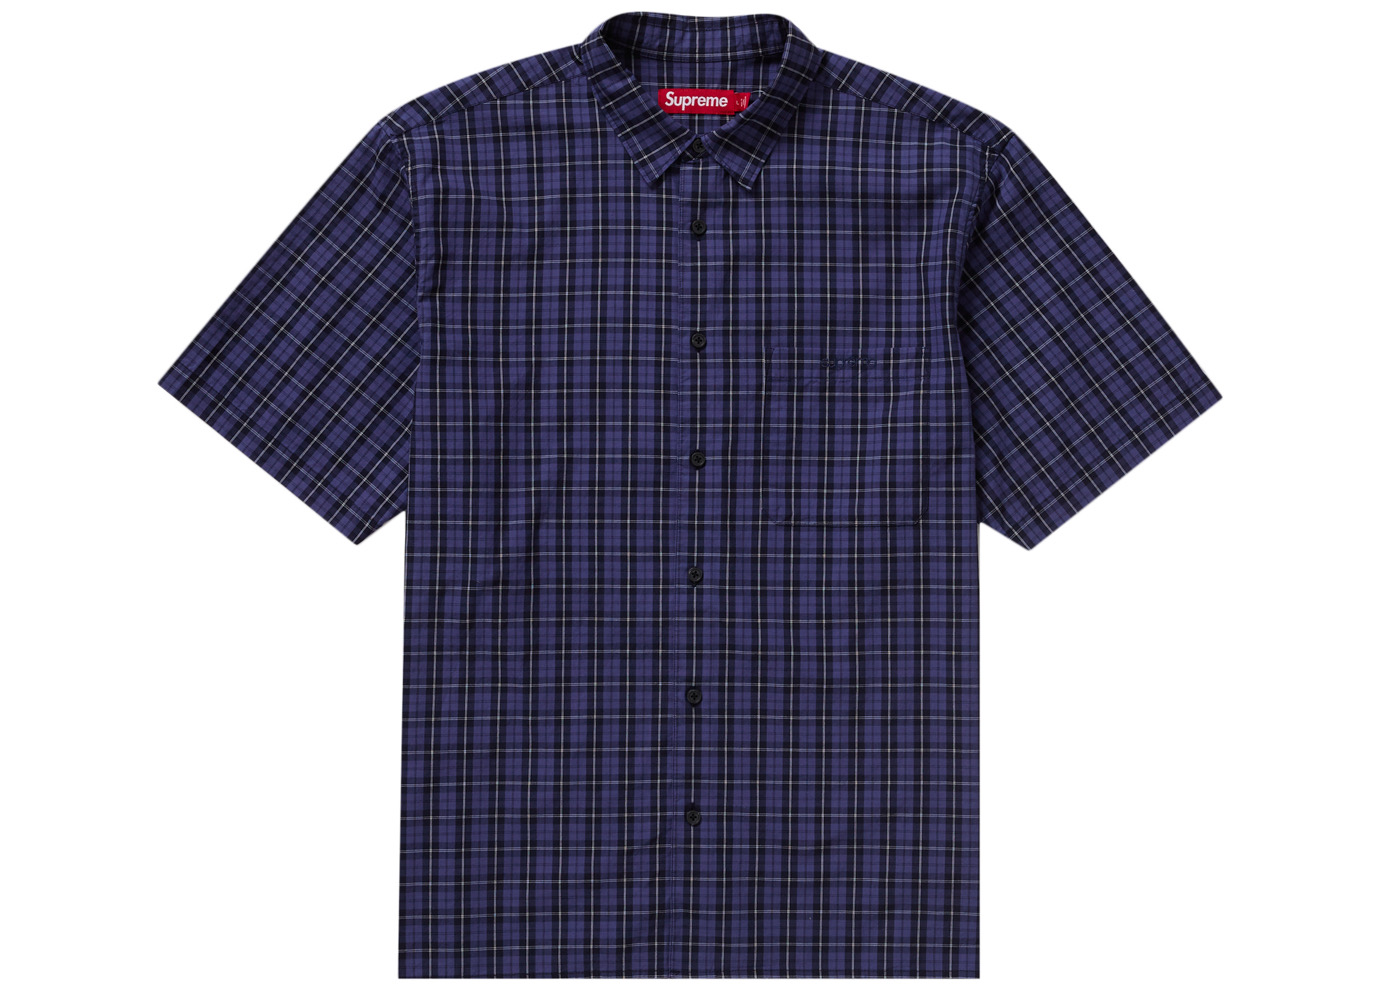 Buy Supreme Shirts Streetwear - StockX